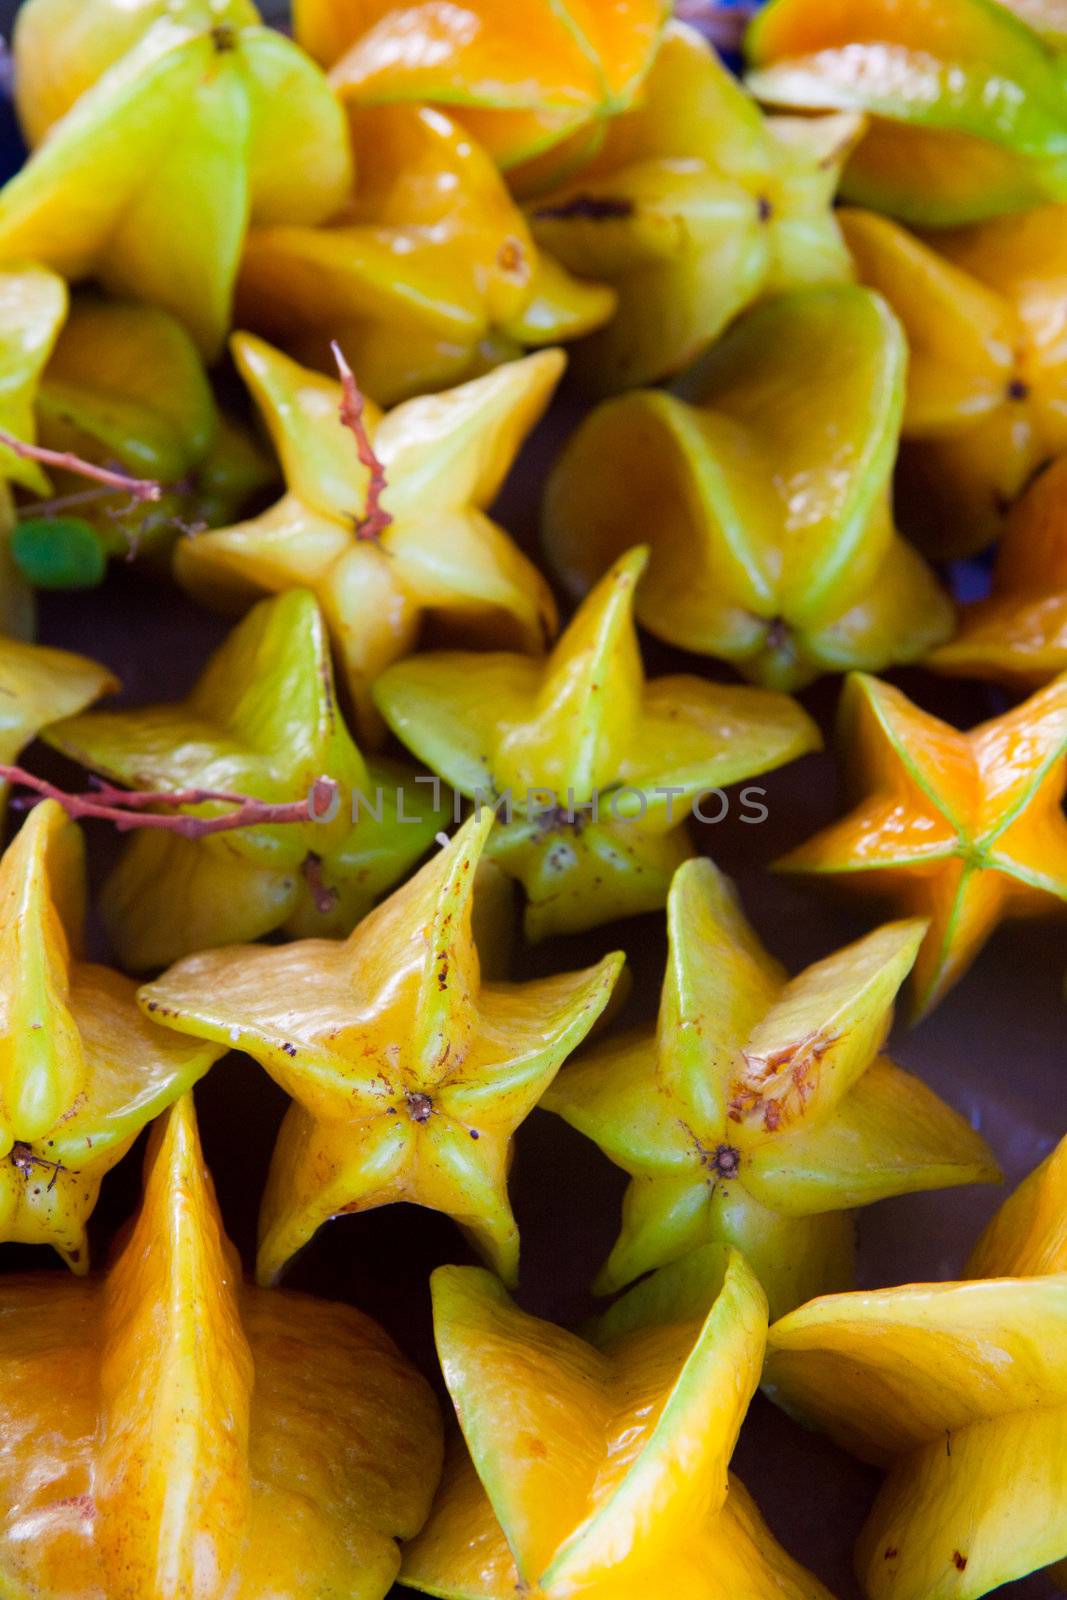 Tropical Star Fruit by joshuaraineyphotography